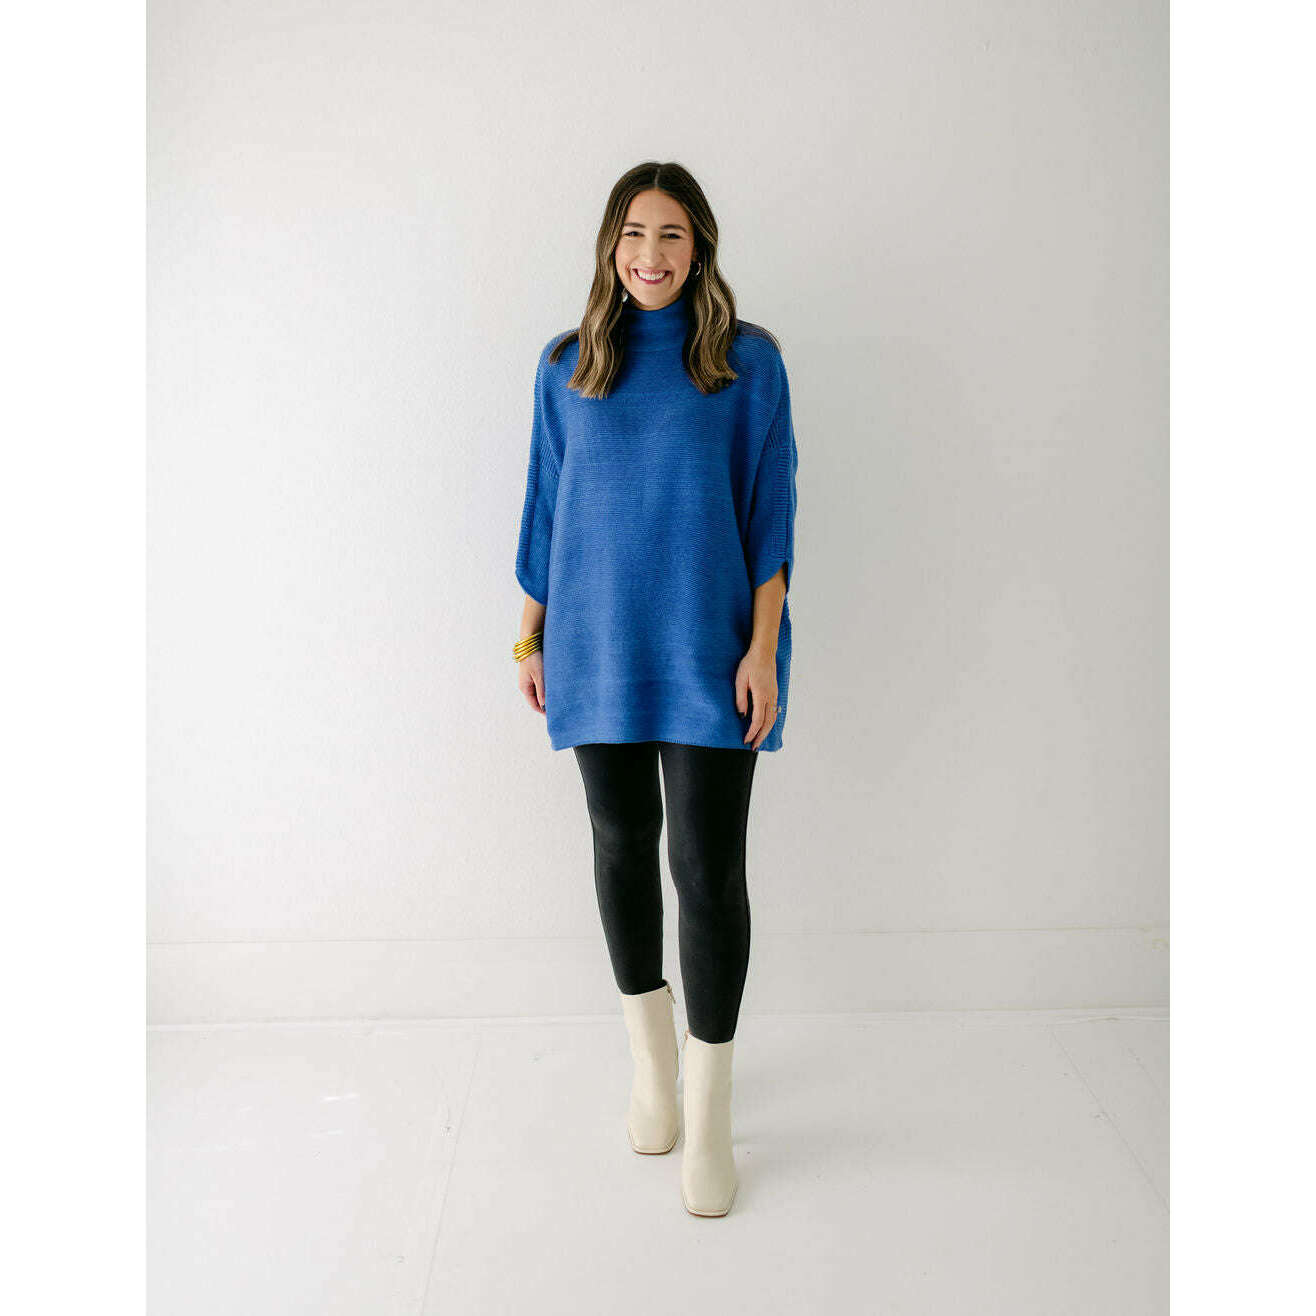 8.28 Boutique:Kerisma Knits,Kerisma Knits Boho Tunic in Persian Blue,Sweaters